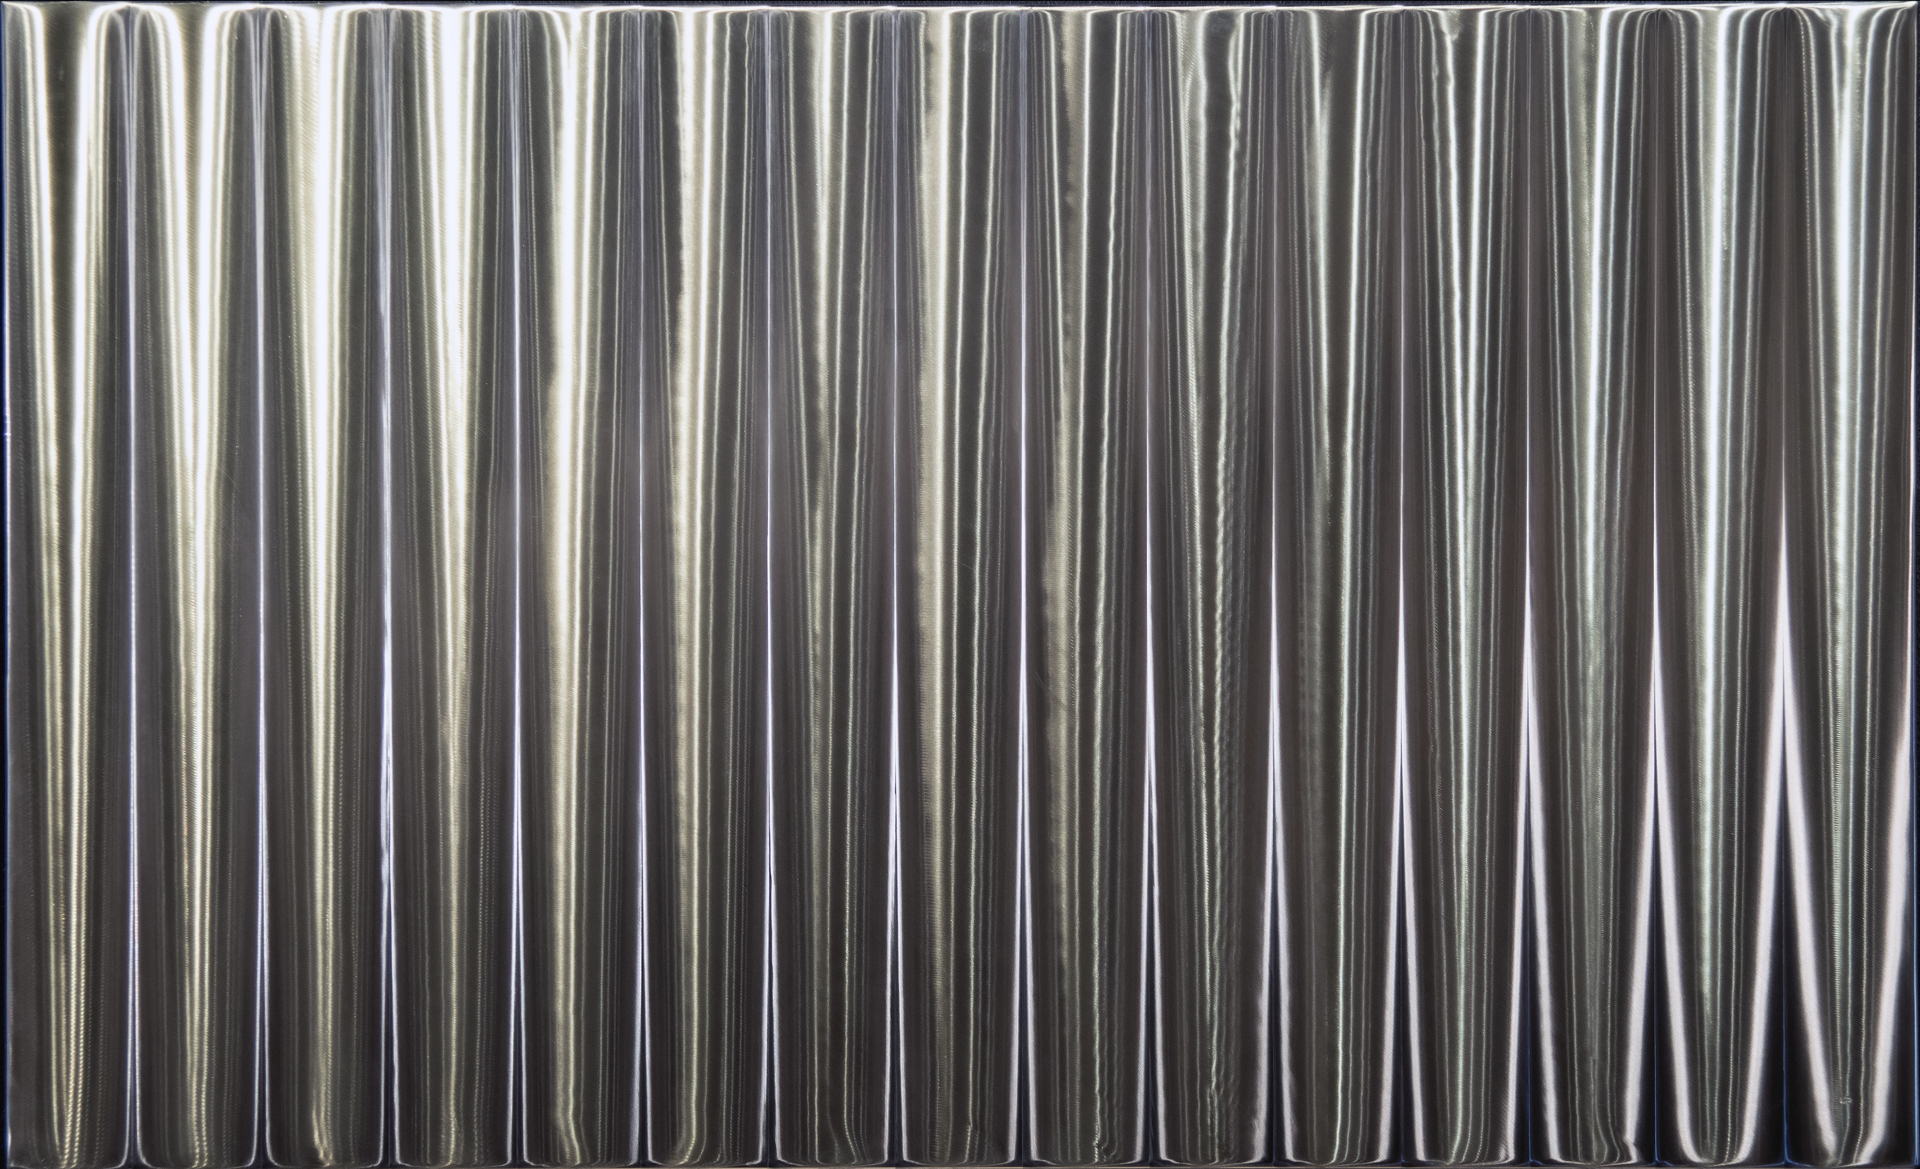 Stripes by Bruce R. MacDonald